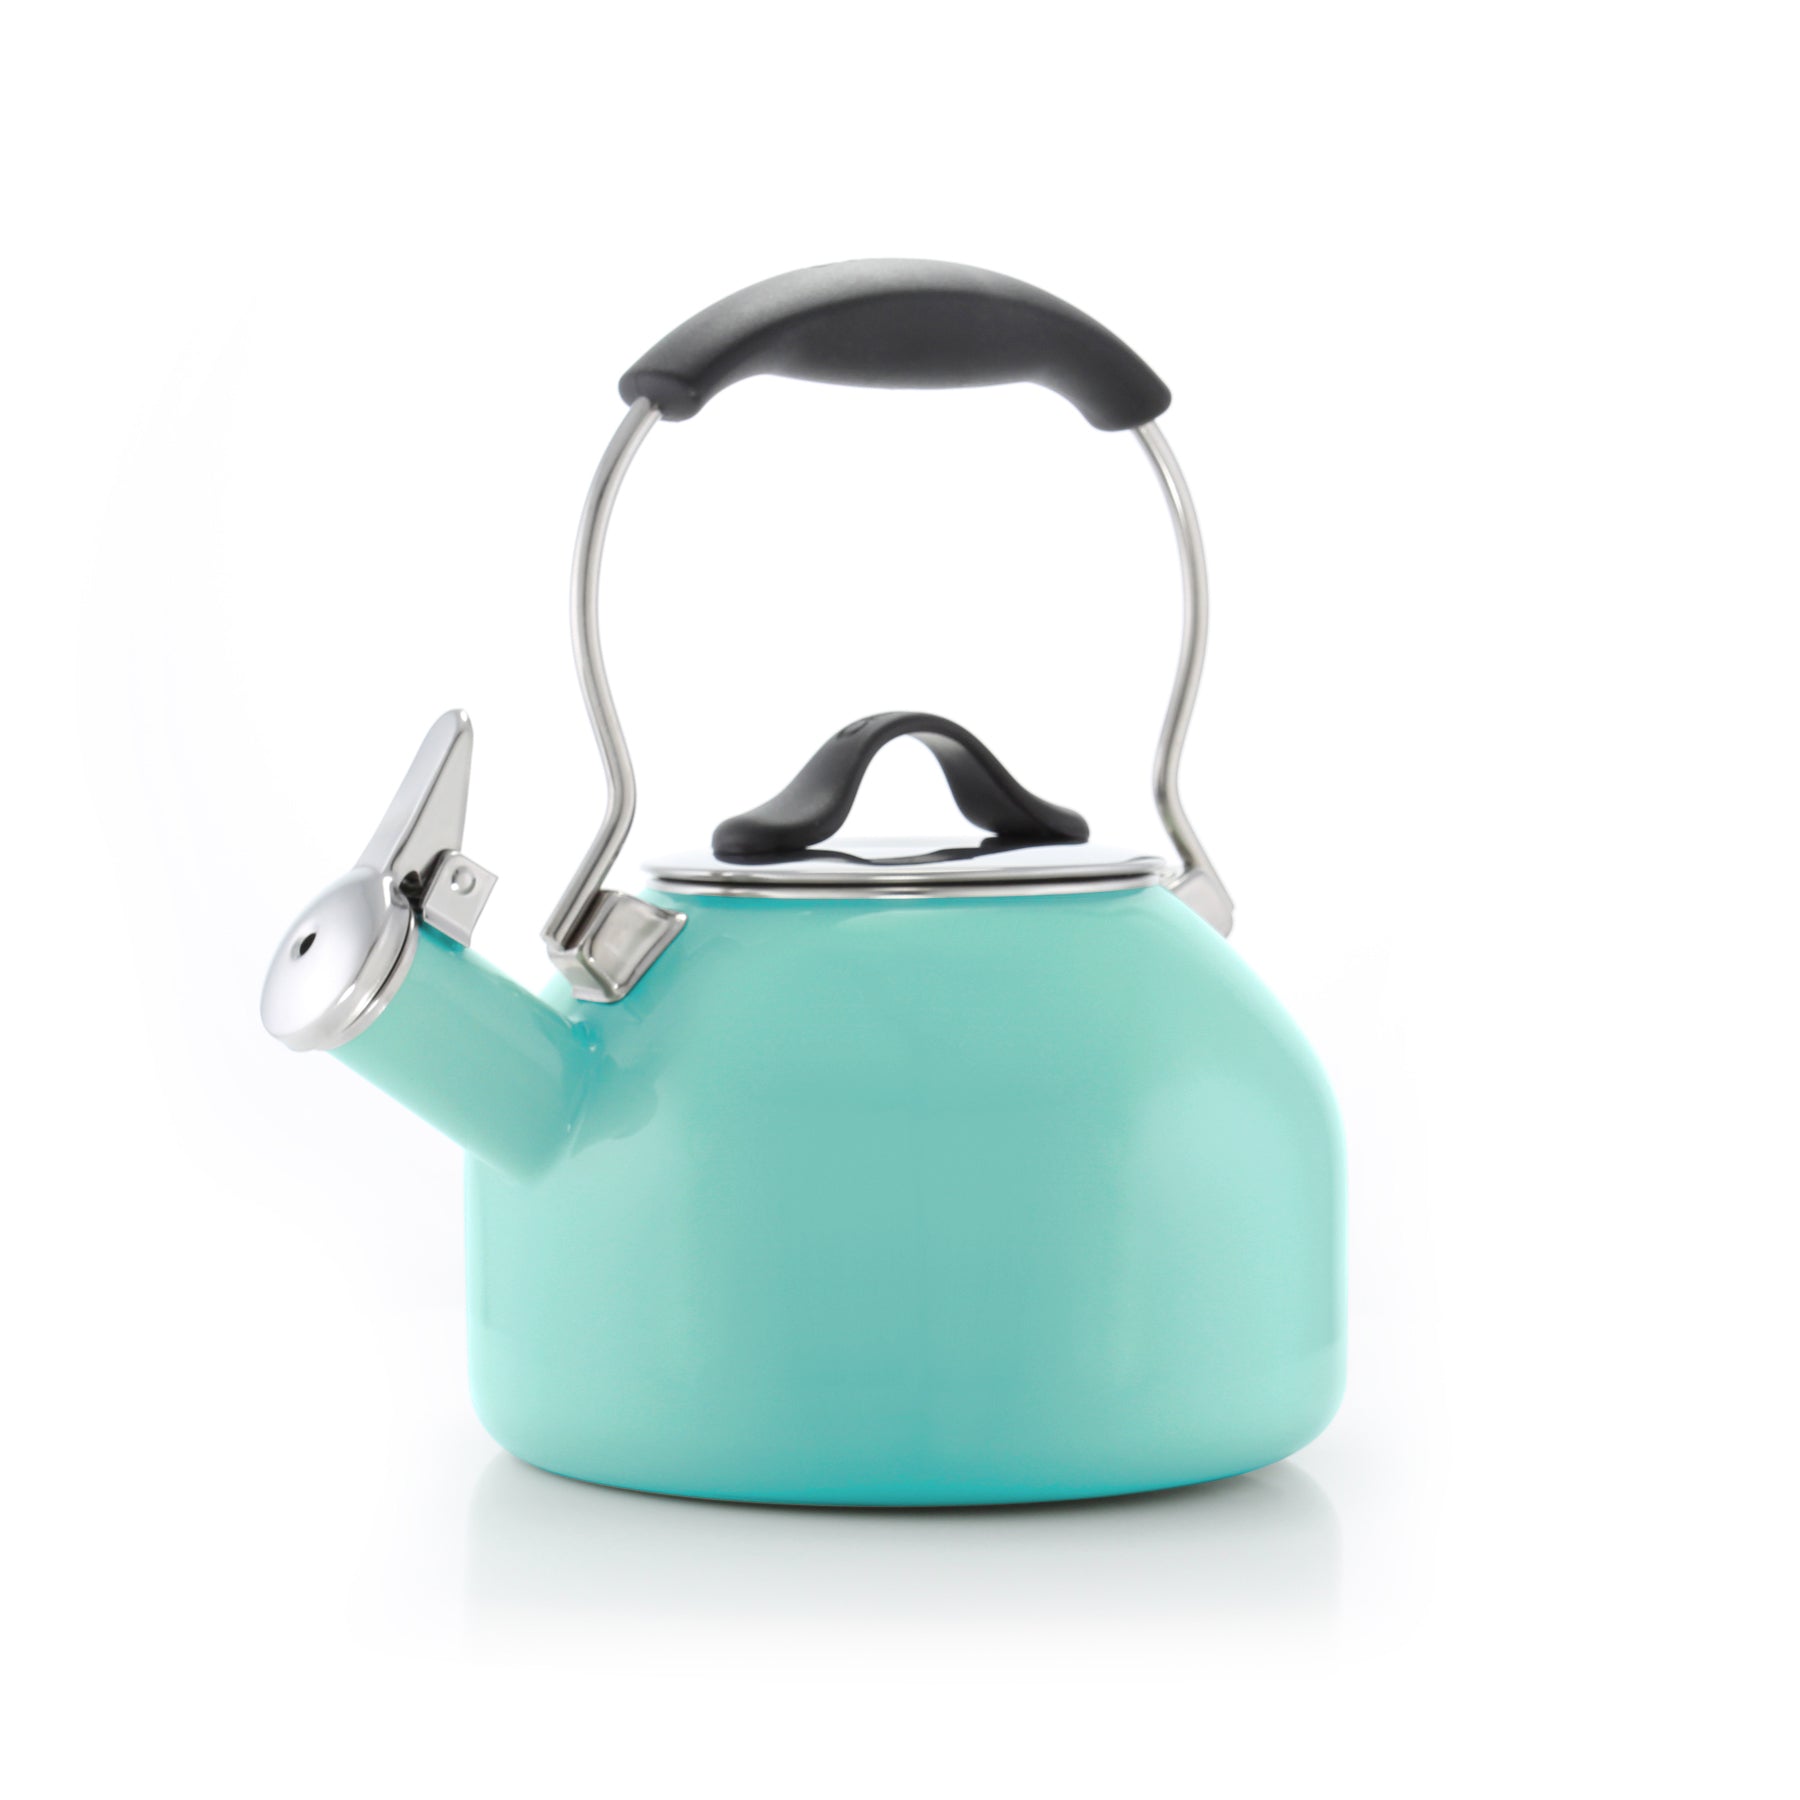 Vintage Chantal Teakettle - Chantal Apple Red Enamel Teapot with